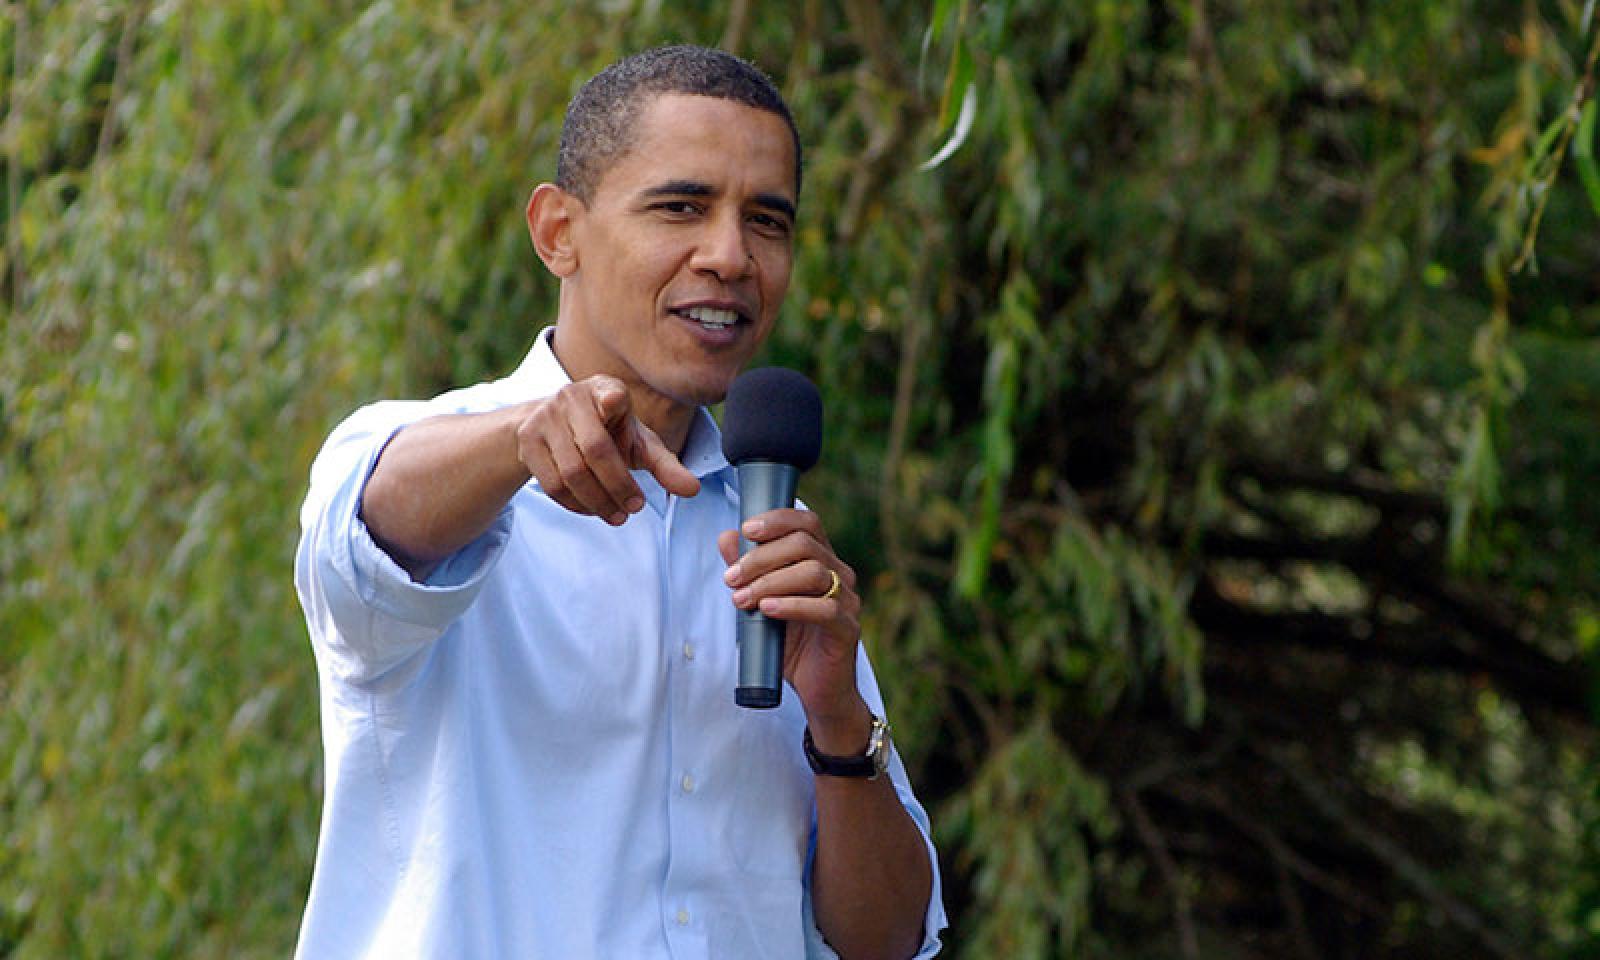 Obama Should Not Seek Re-Election In 2012